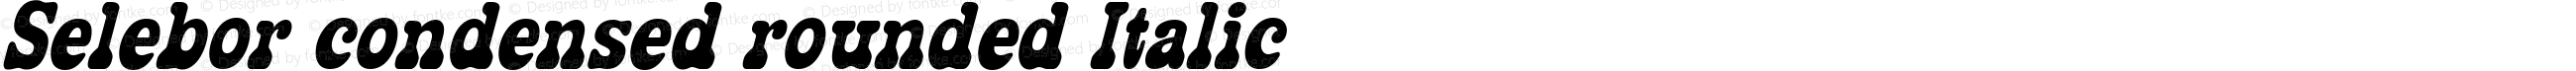 Selebor condensed rounded Italic